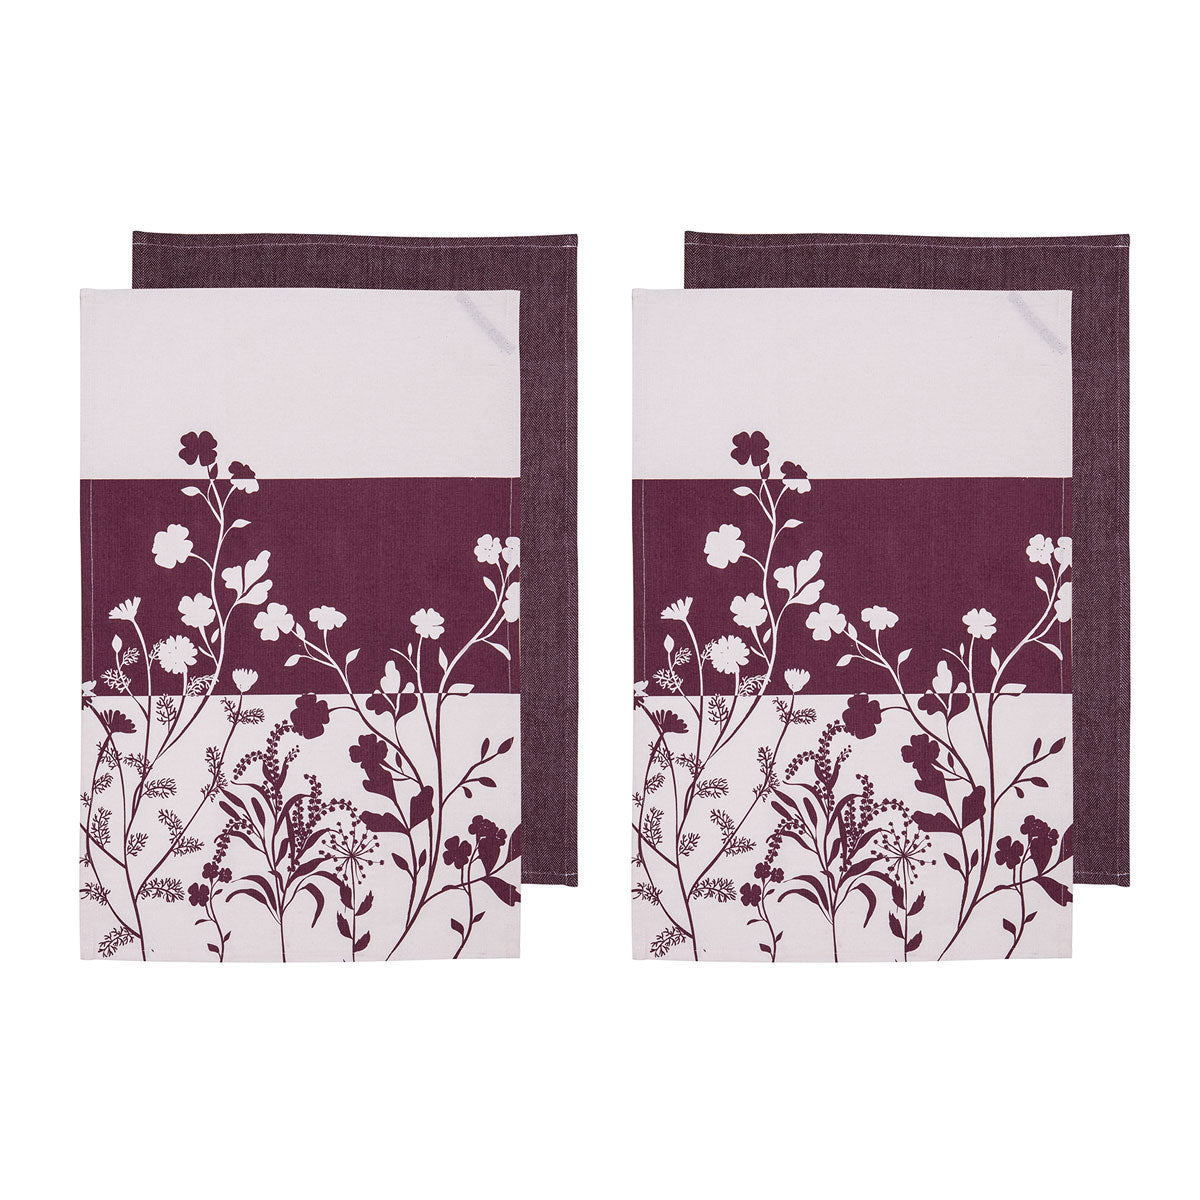 Ladelle Set of 4 Homespun Flower Cotton Kitchen Tea Towels 50 x 70 cm Mulberry